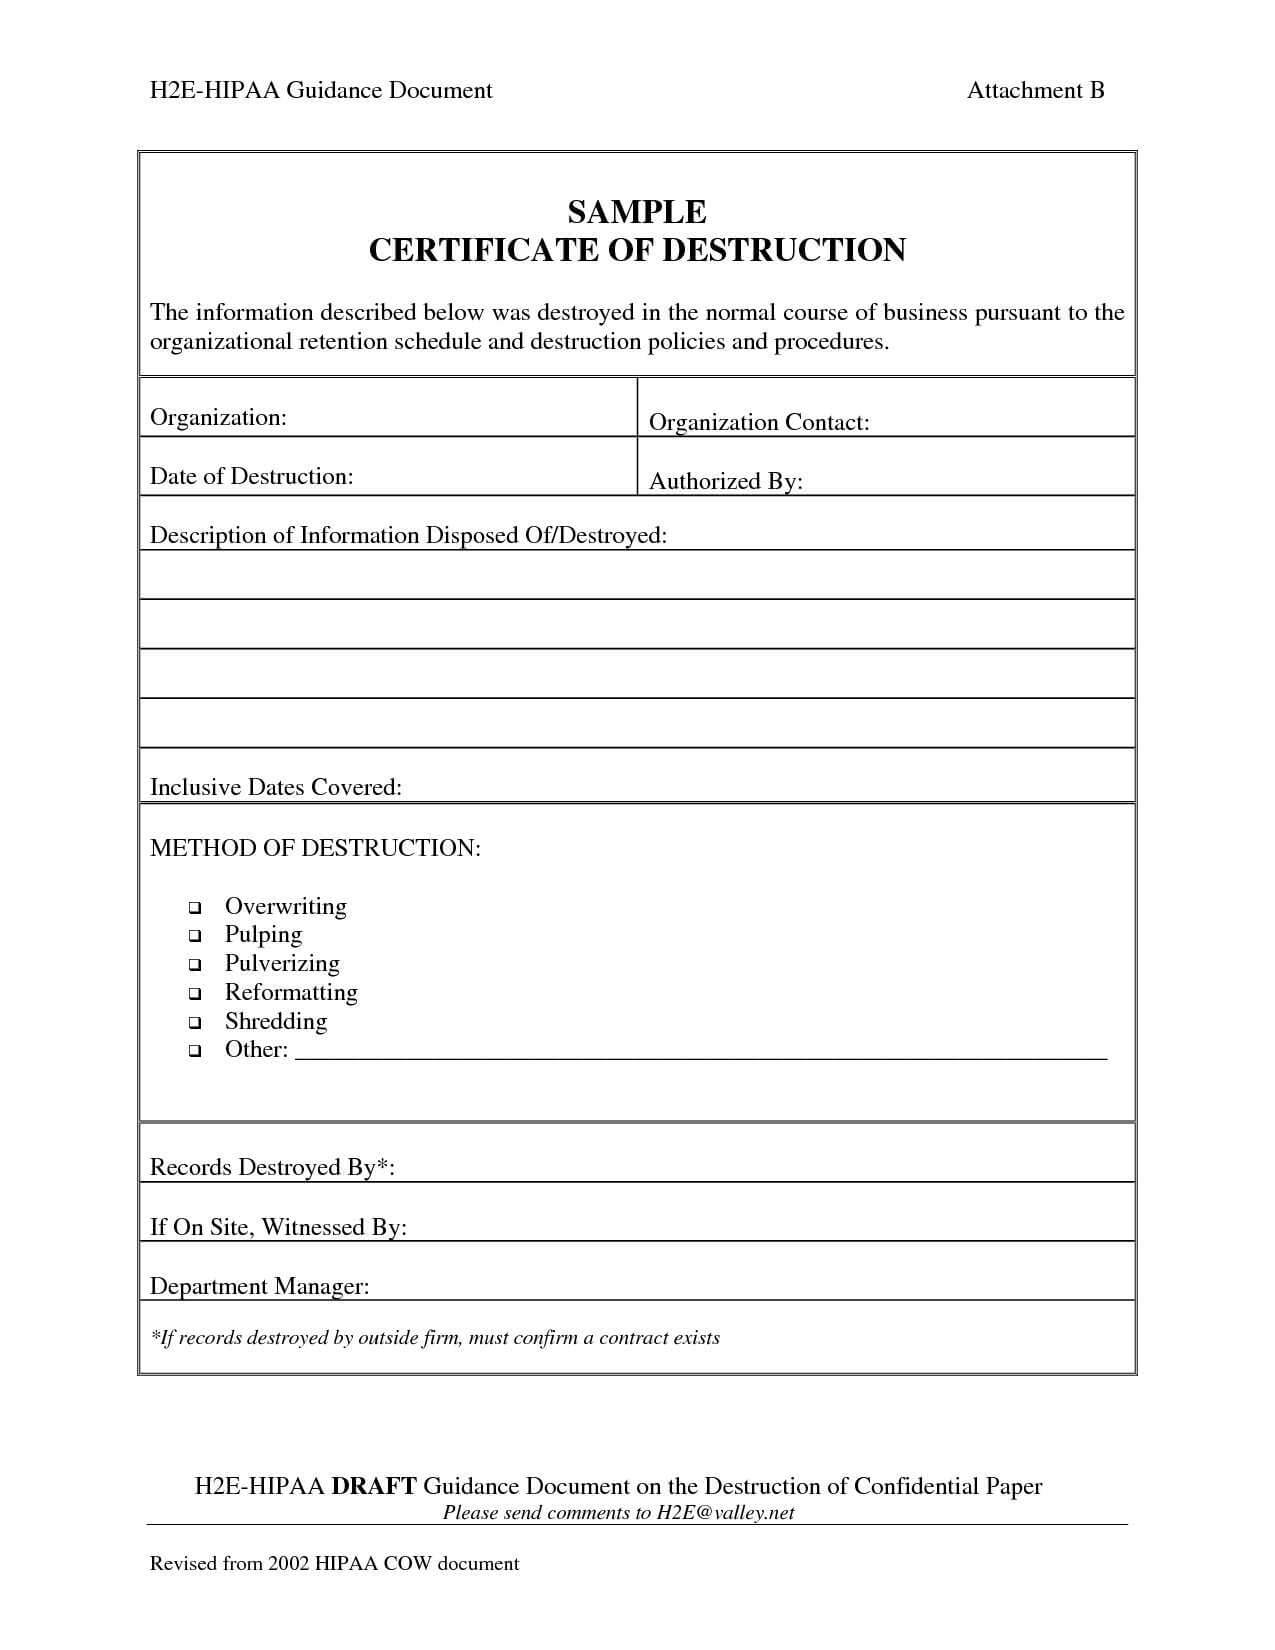 Certificate Of Destruction Template Word Intended For Destruction Certificate Template